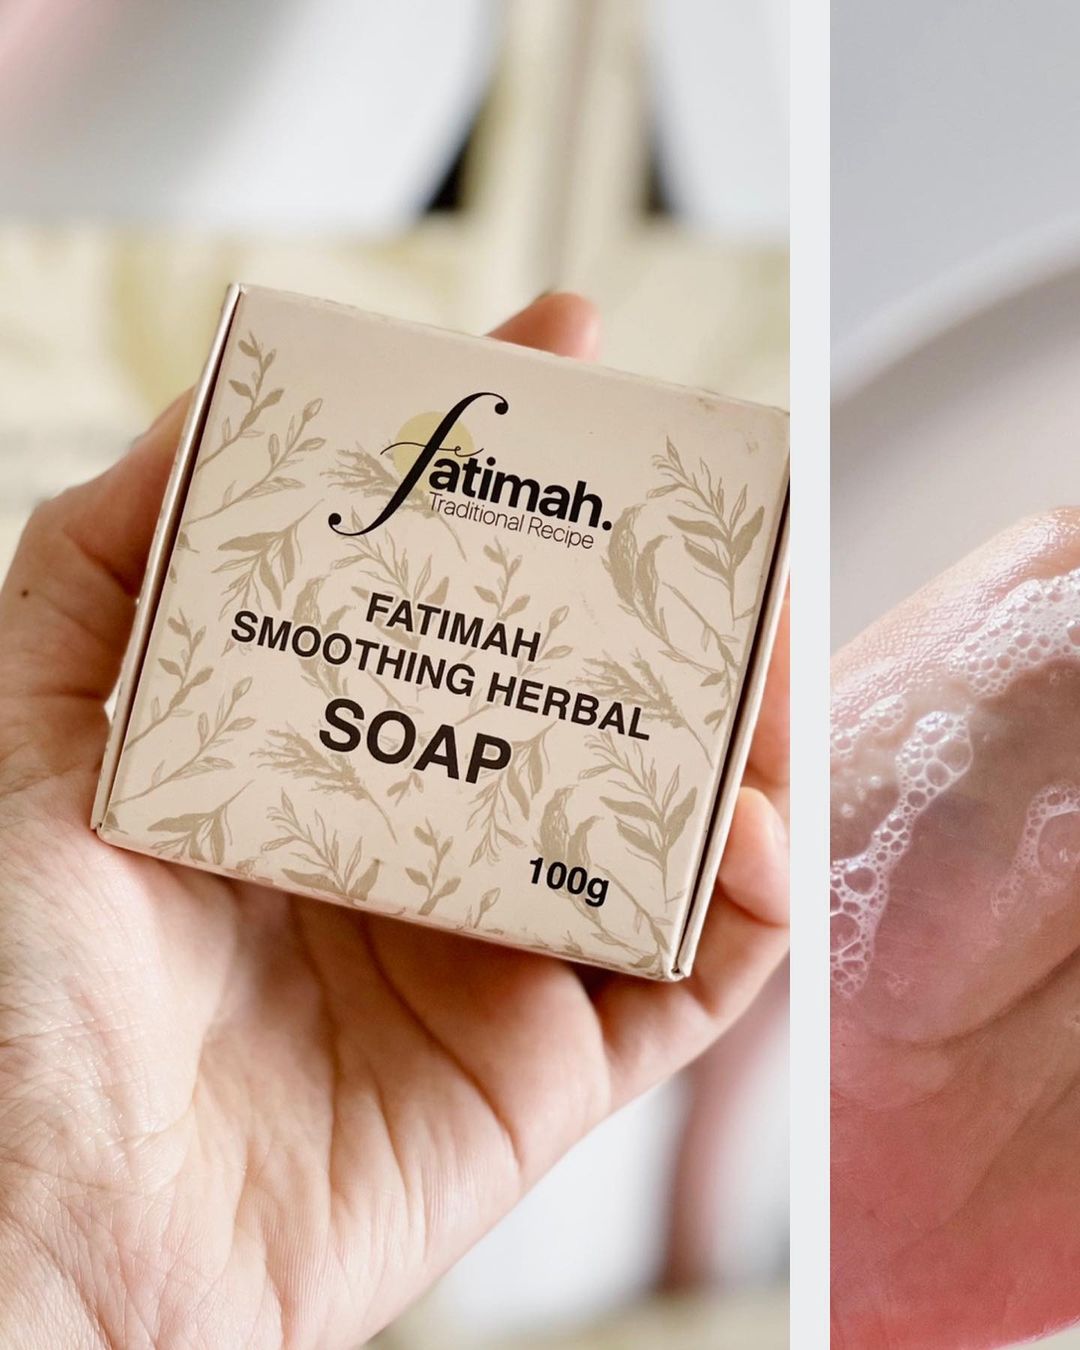 Fatimah Smoothing Herbal Soap